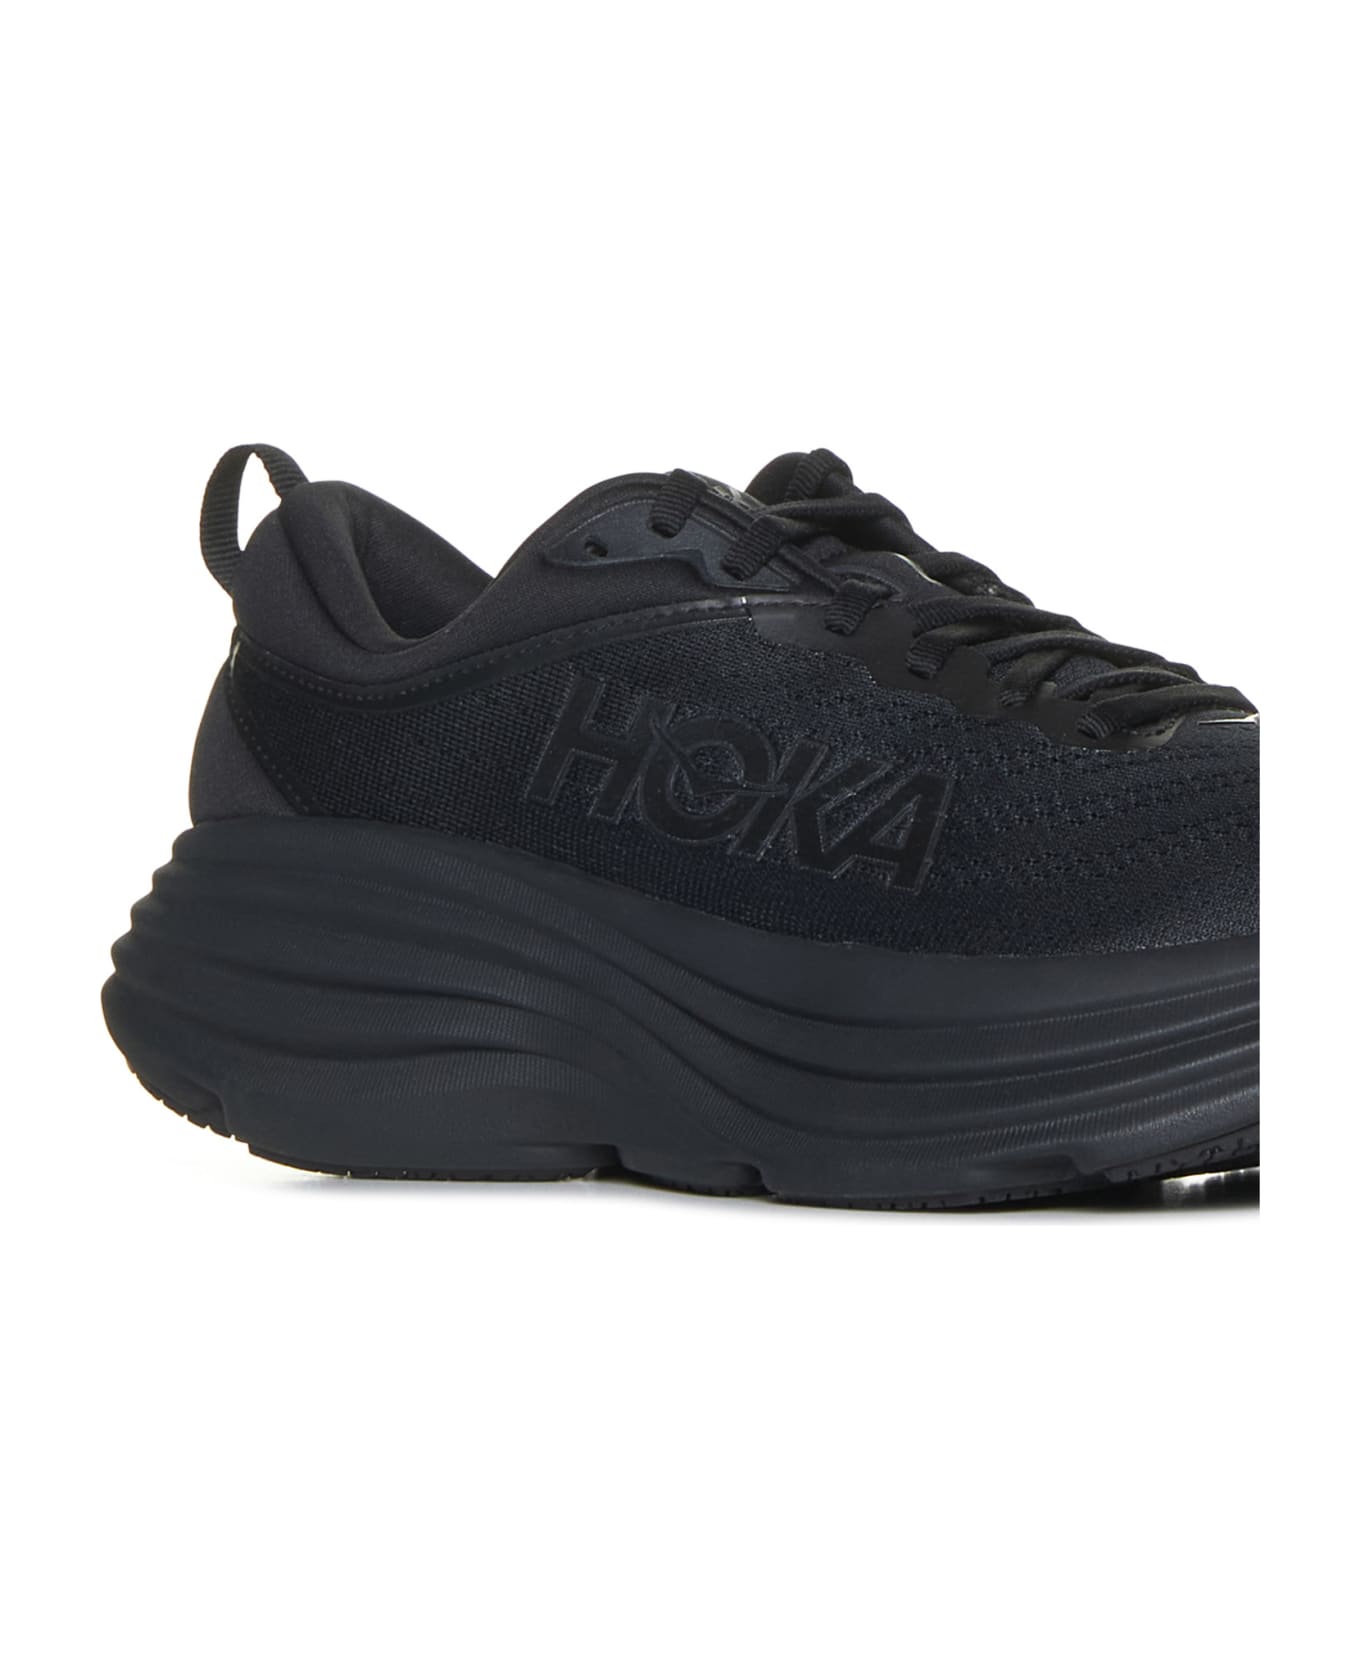 Hoka Sneakers - Black / black